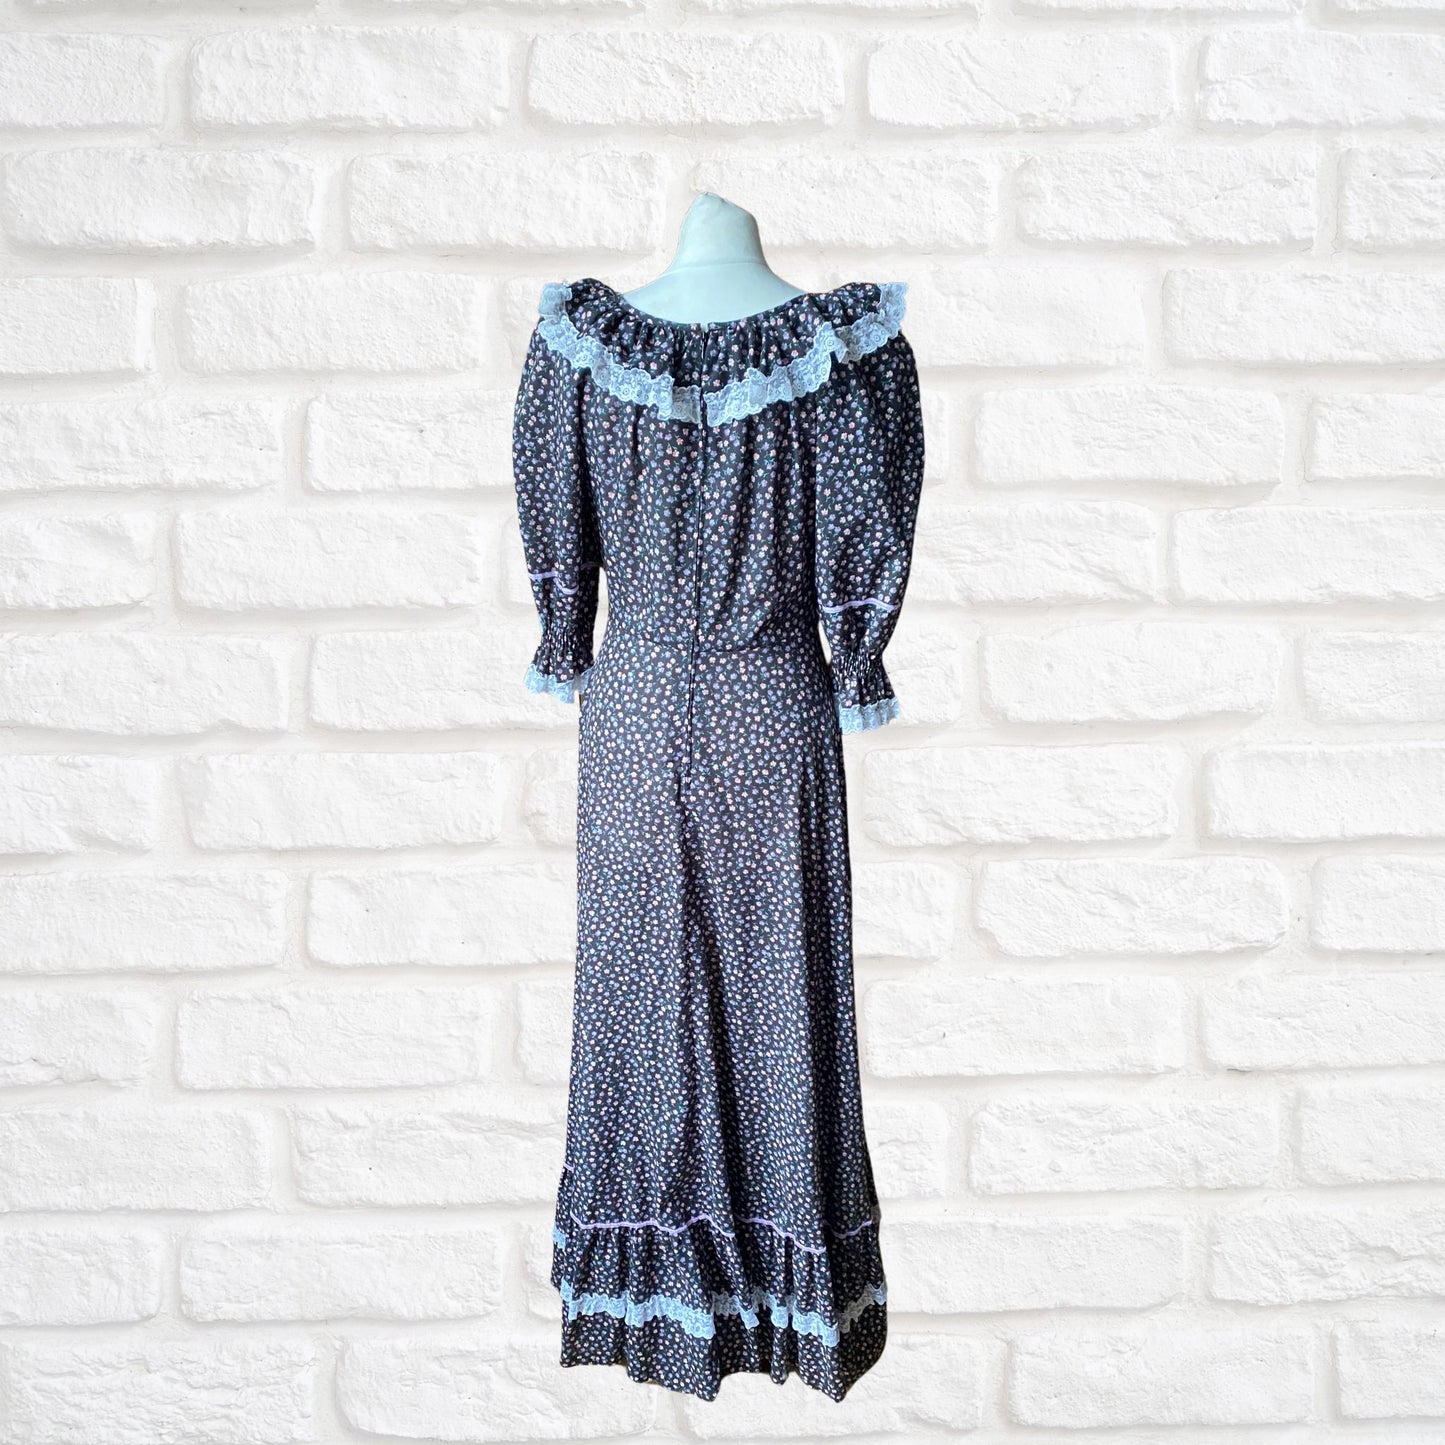 Vintage 70s Maxi Length Black Floral Prairie Dress with Lace Trim. Approx UK size 10-12